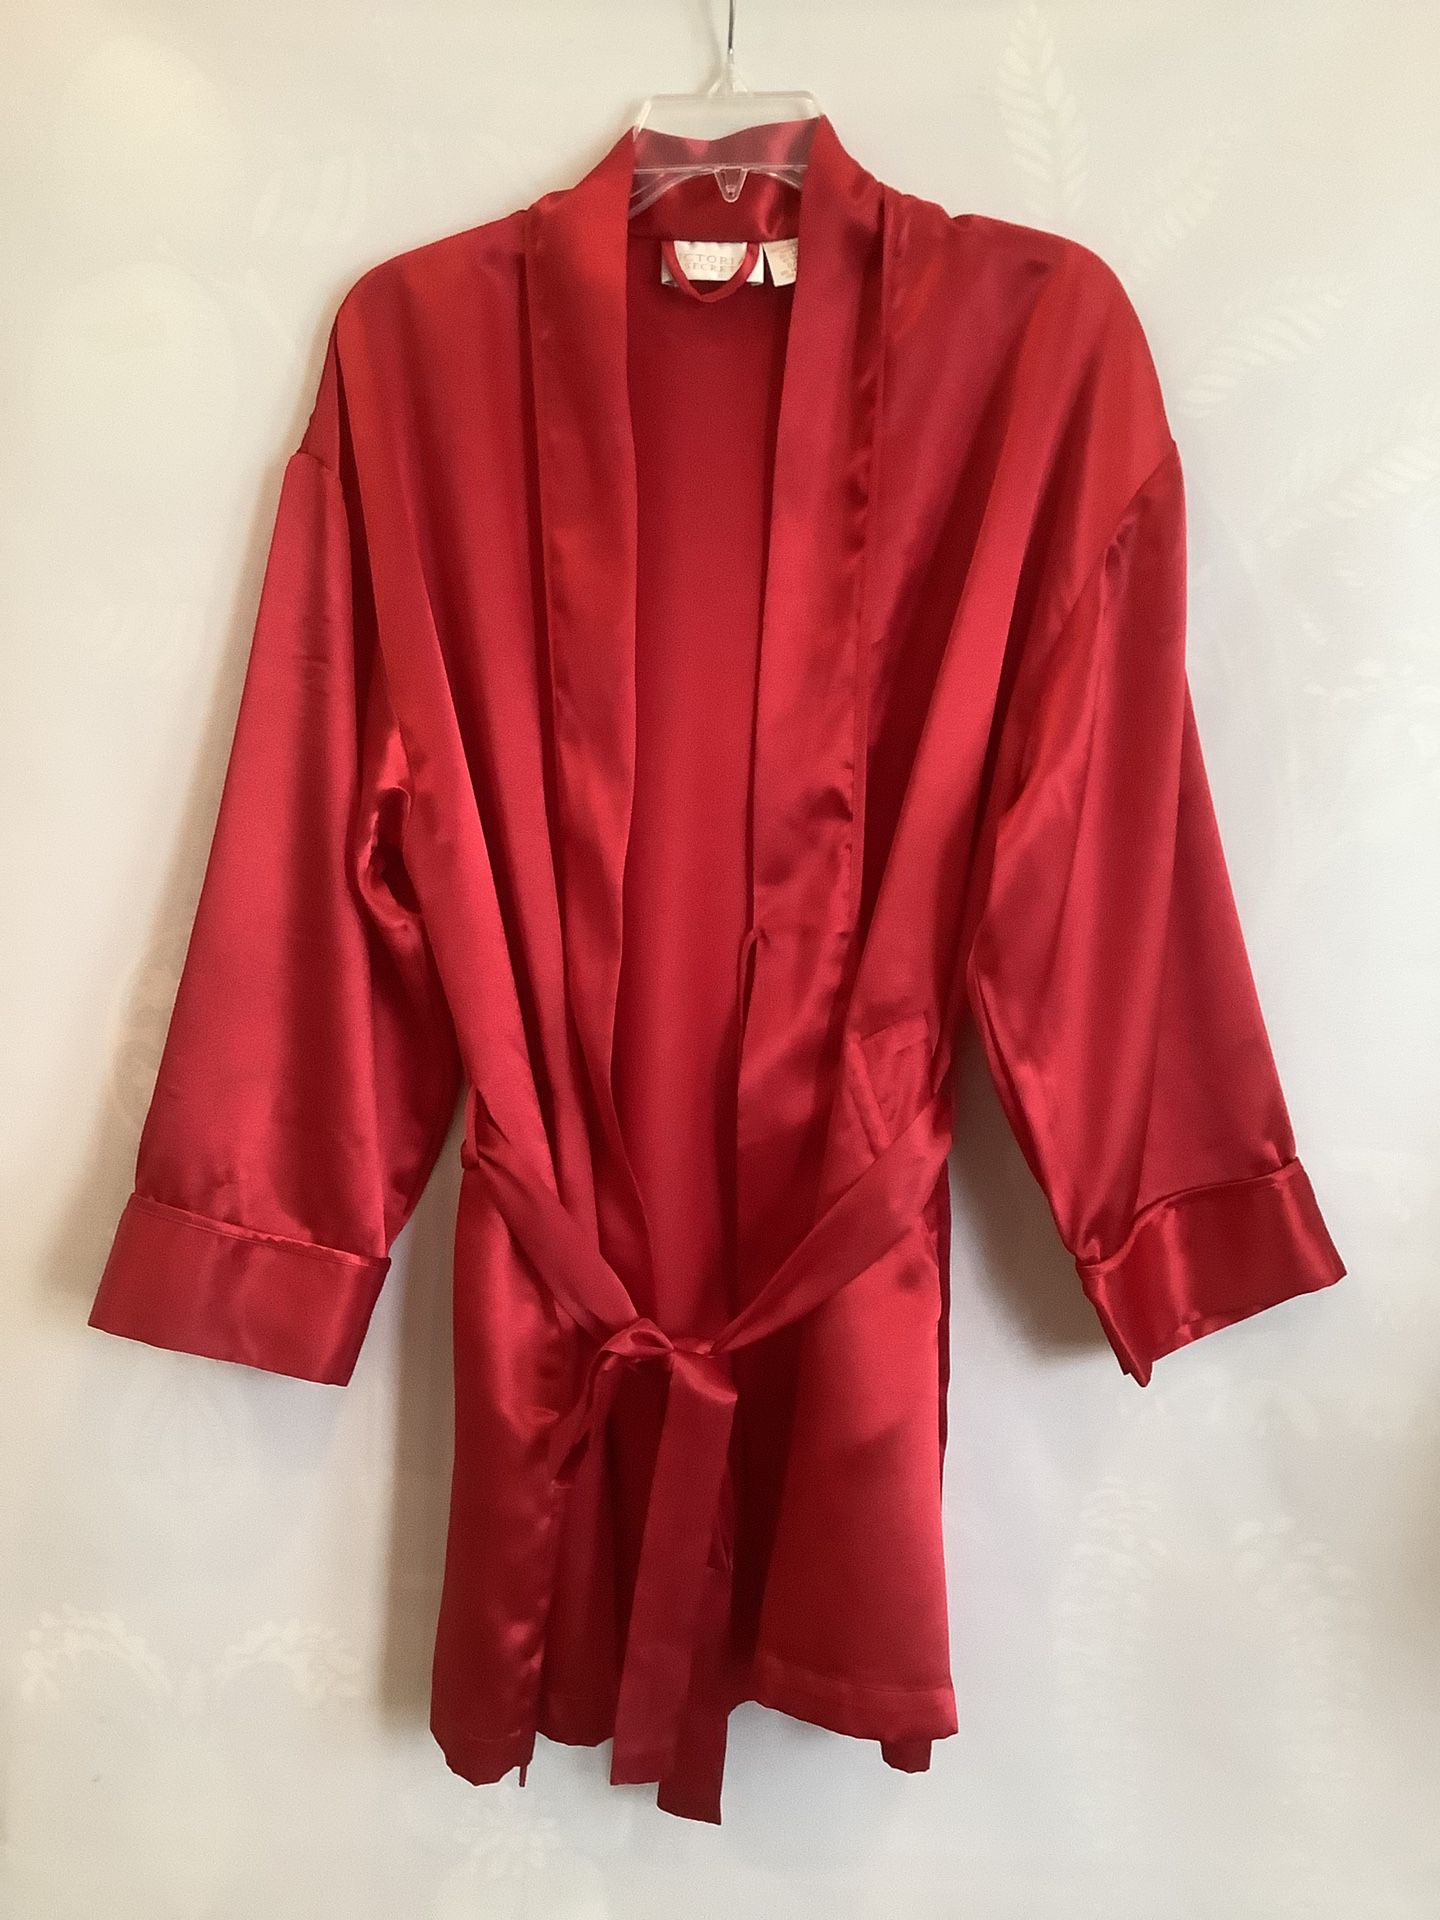 VTG Gold Label Victoria's Secret Women's Red Satin Long Sleeve Robe Belted Sz S